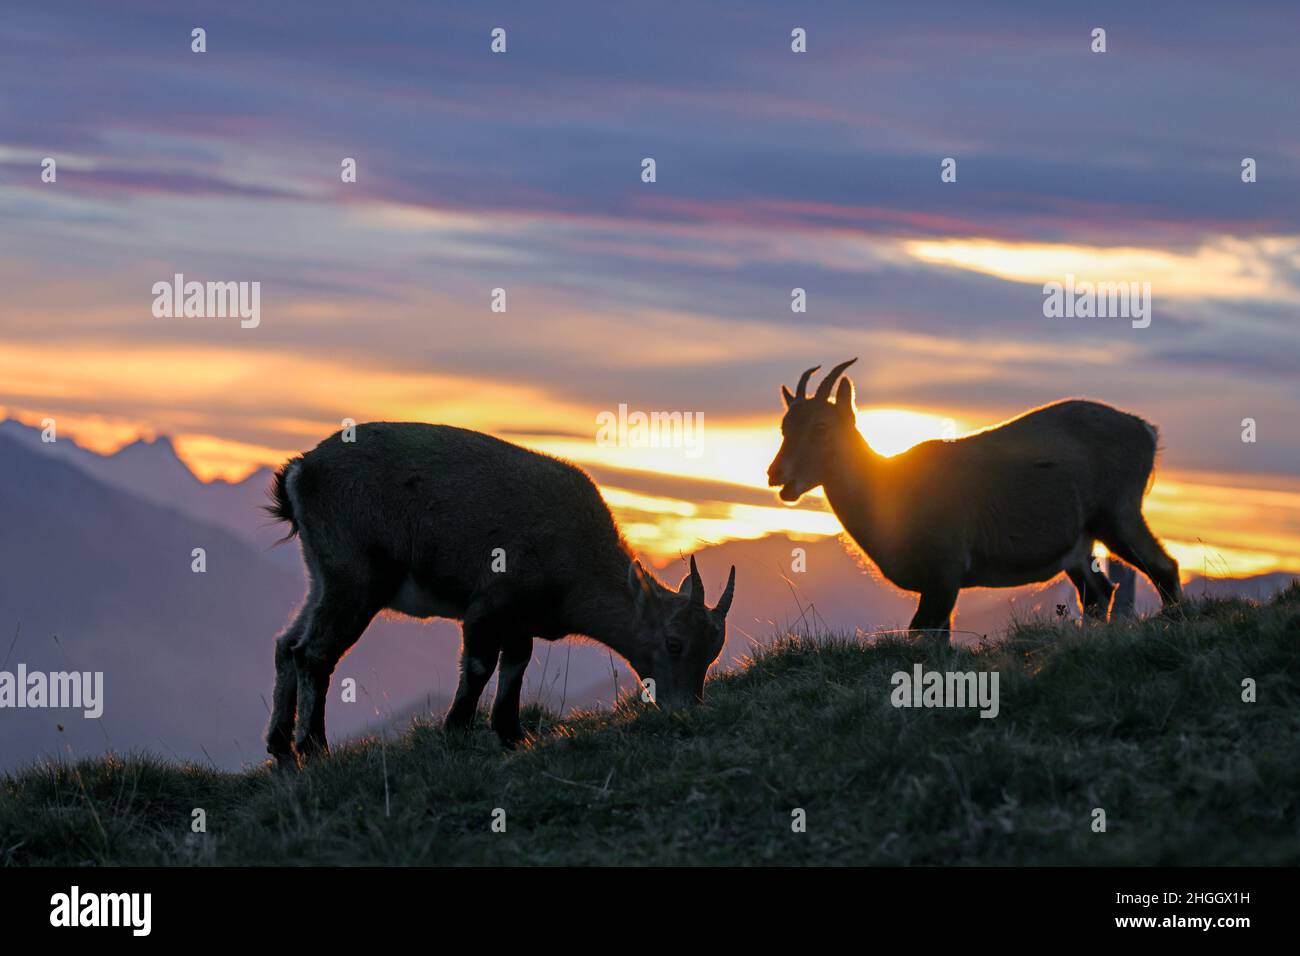 Ibex alpin (Capra ibex, Capra ibex ibex), deux jeunes animaux qui broutent ensemble sur une pente, Backlight, Suisse, Oberland bernois, Beatenberg Banque D'Images